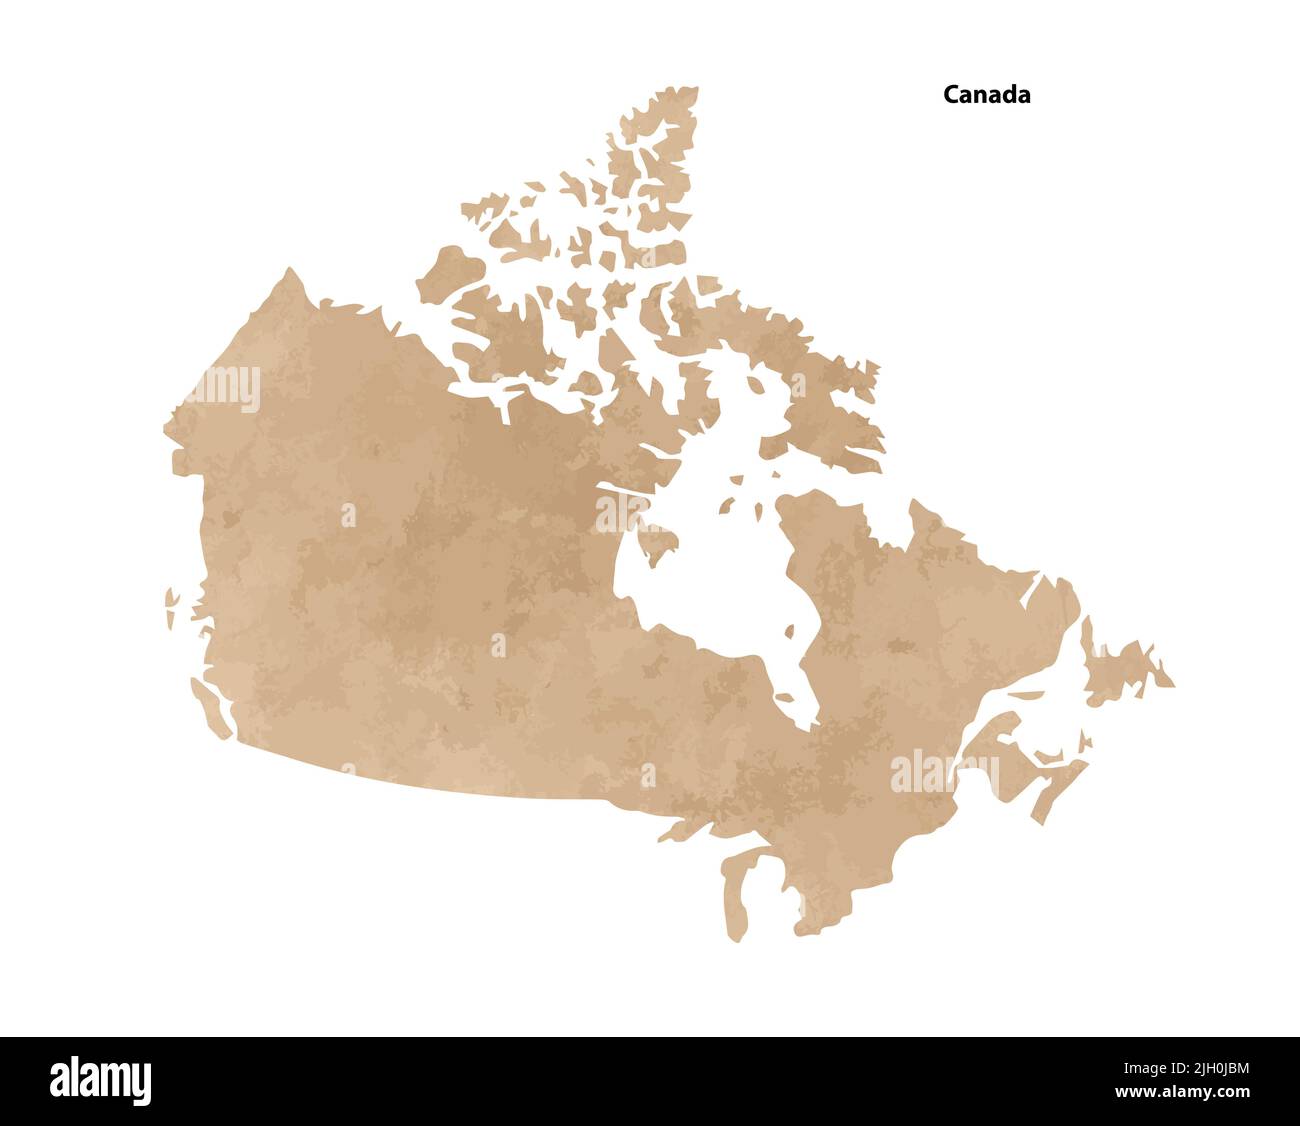 Alte Vintage Papier strukturierte Karte von Kanada Land - Vektor-Illustration Stock Vektor